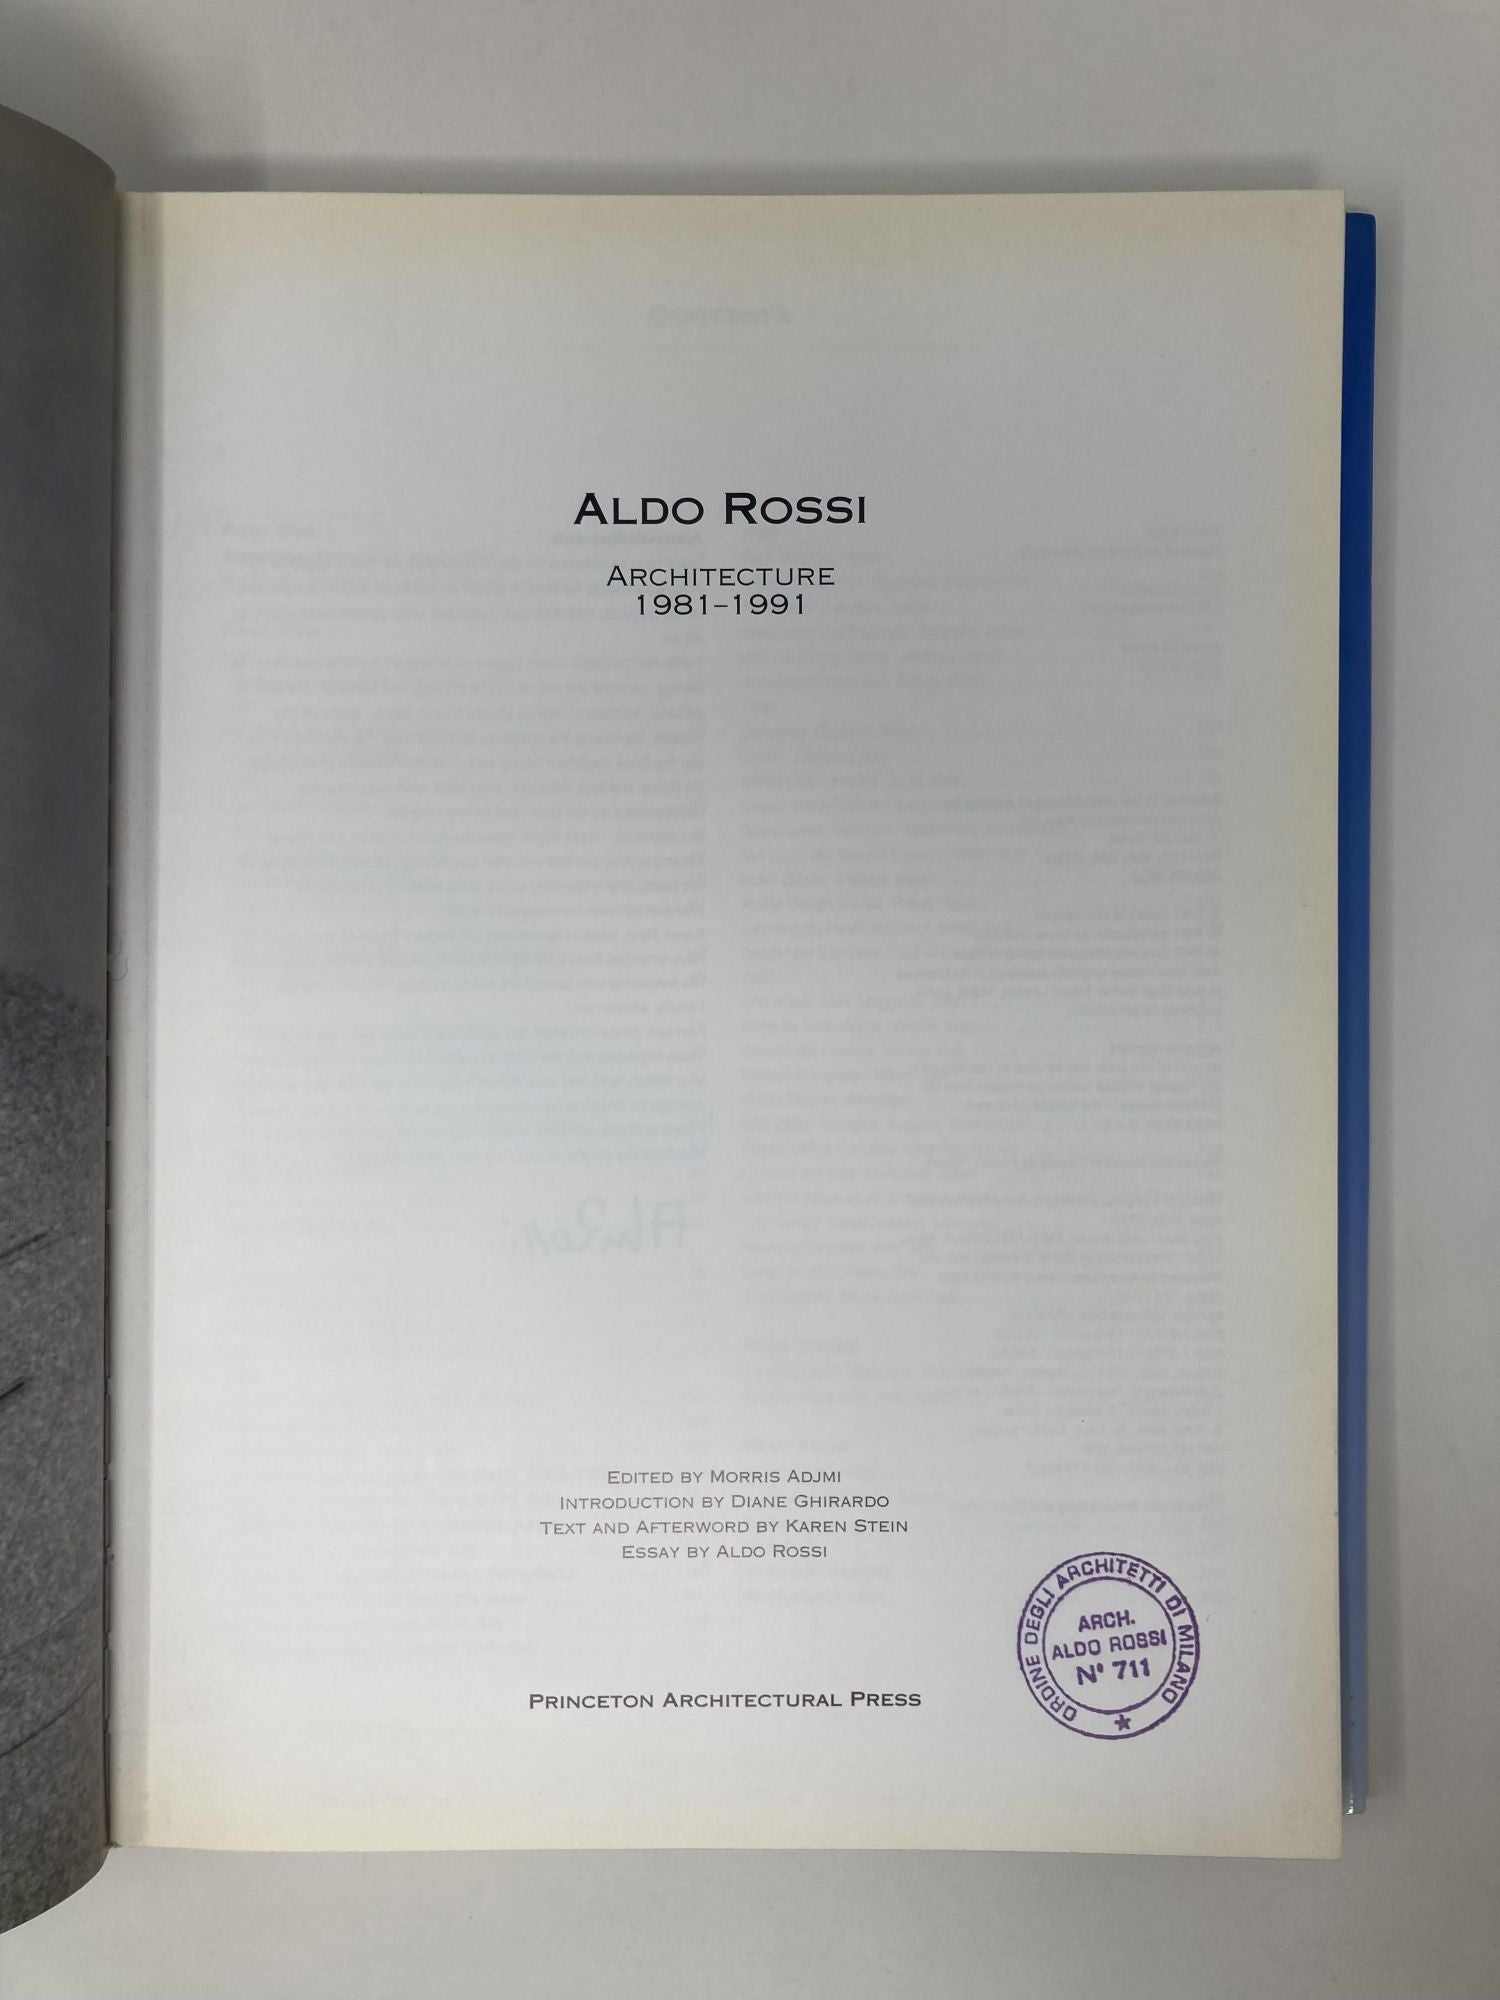 Aldo Rossi: Architecture 1981-1991 by Morris Adjmi on Sag Harbor Books